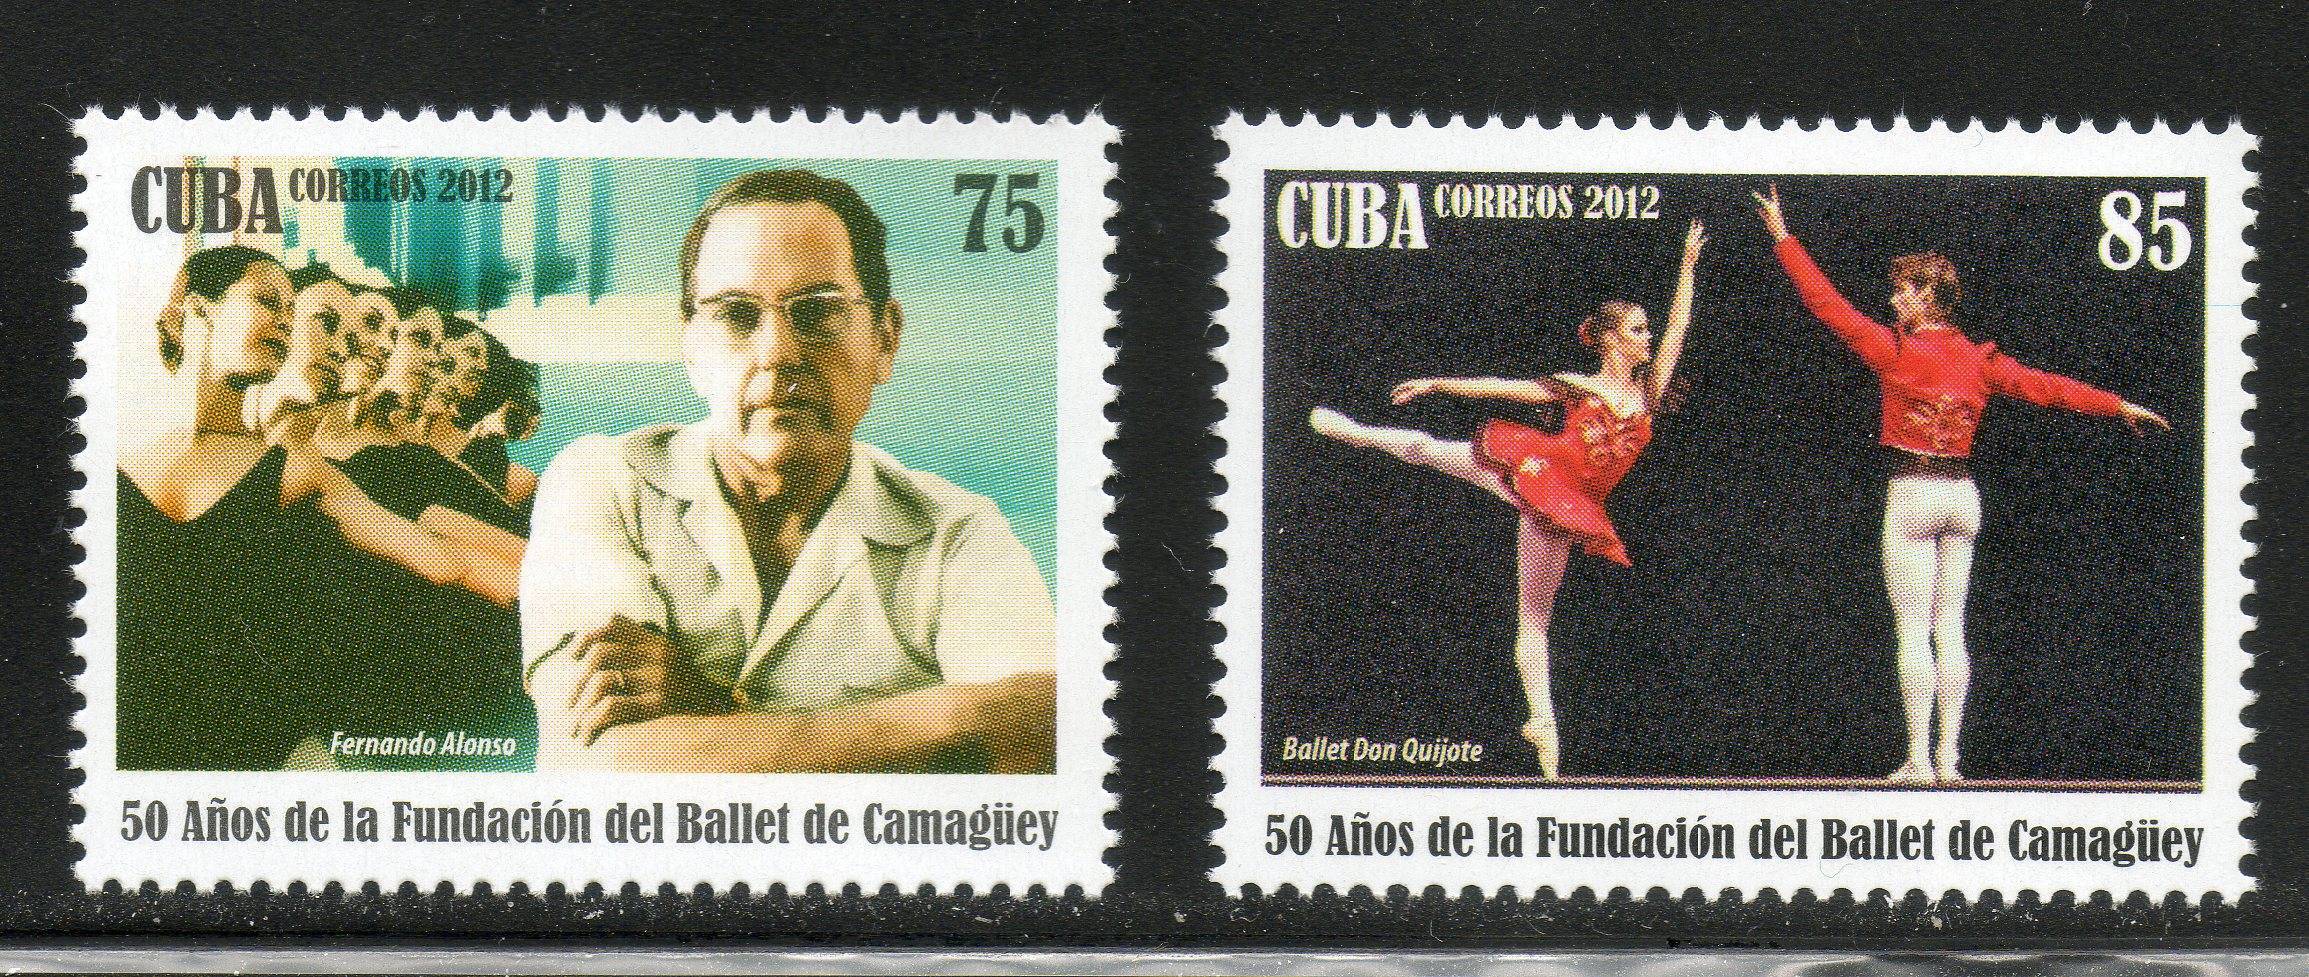 CUBA Sc# 5339-5340  CAMAGUEY BALLET  Cpl set of 2  2012  MNH